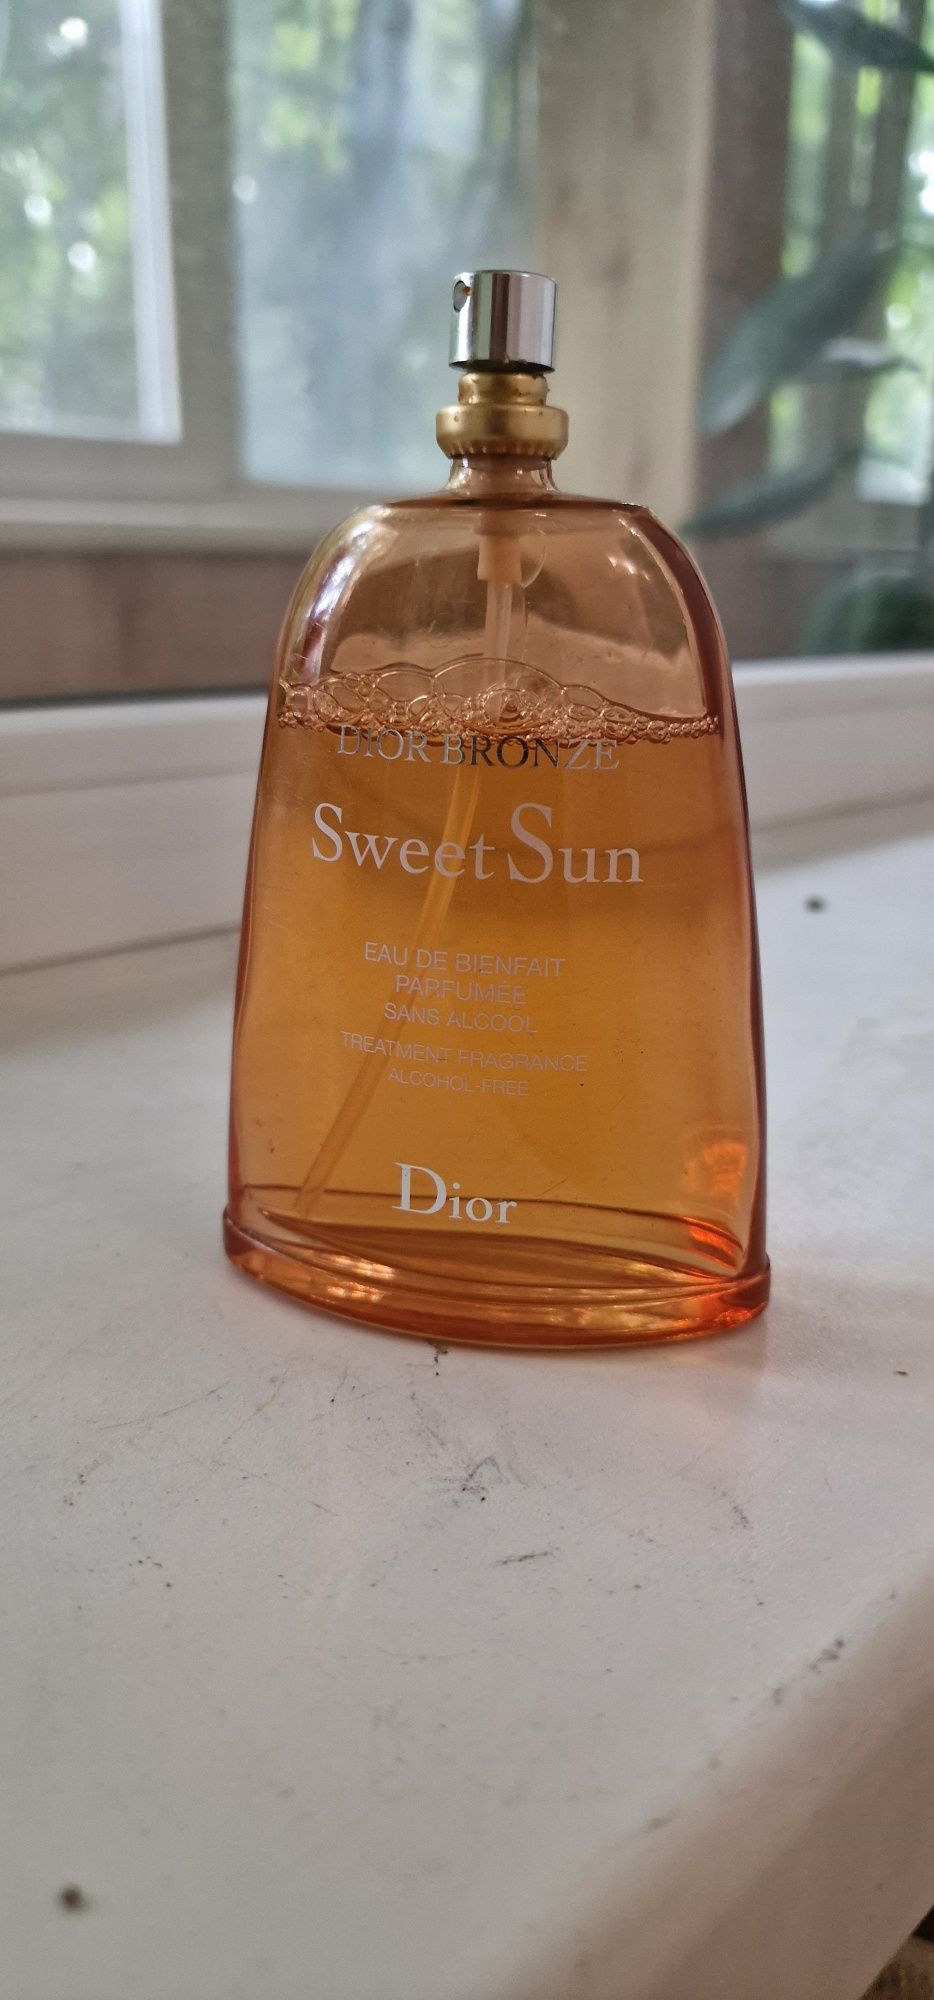 Dior Bronze Sweet Sun